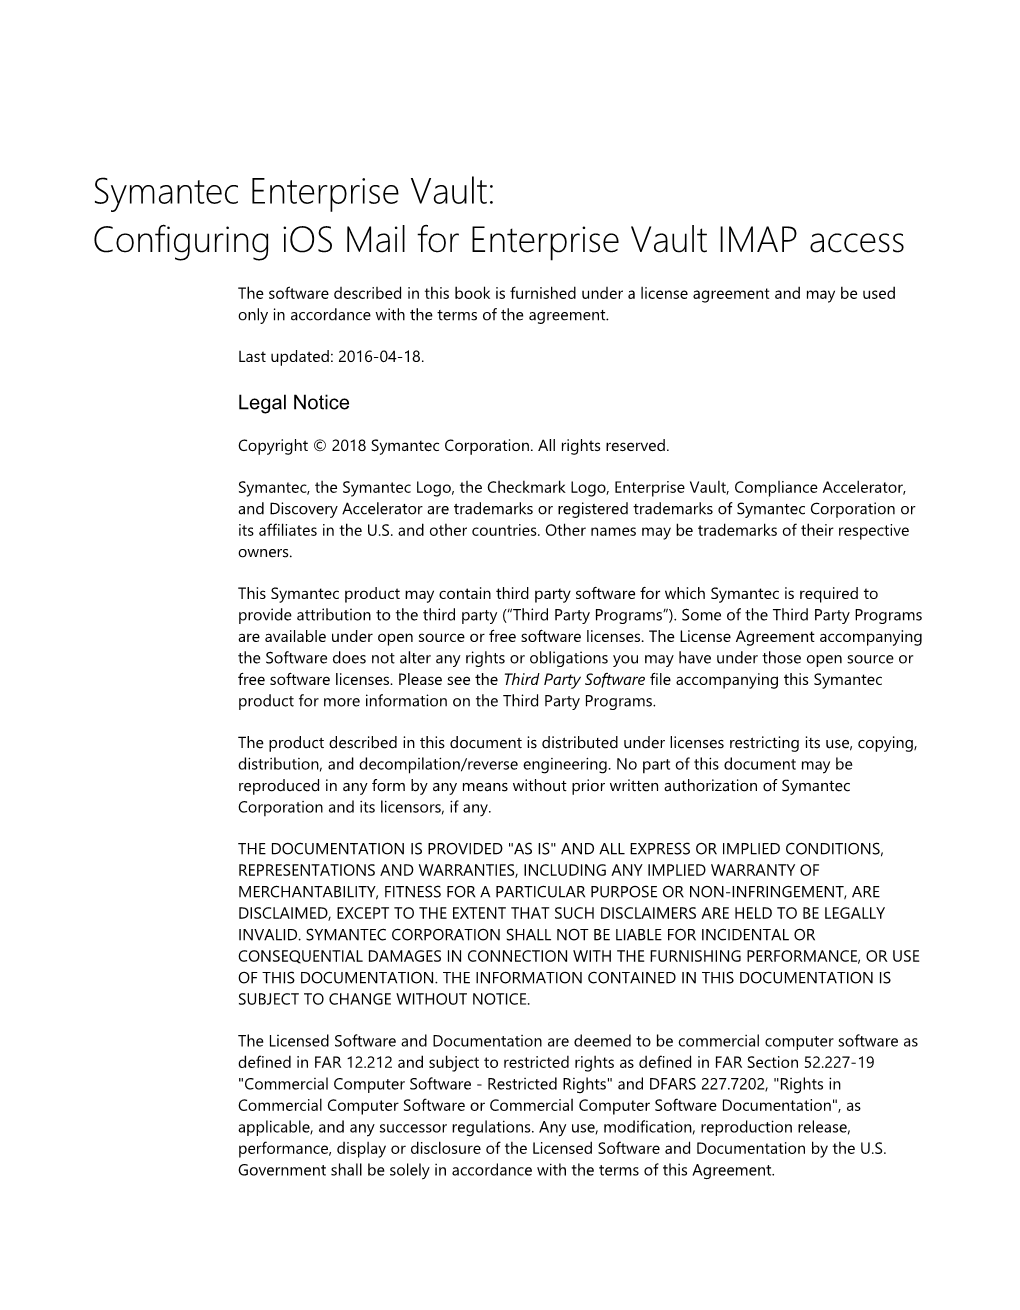 Configuring Ios Mail for Enterprise Vault IMAP Access